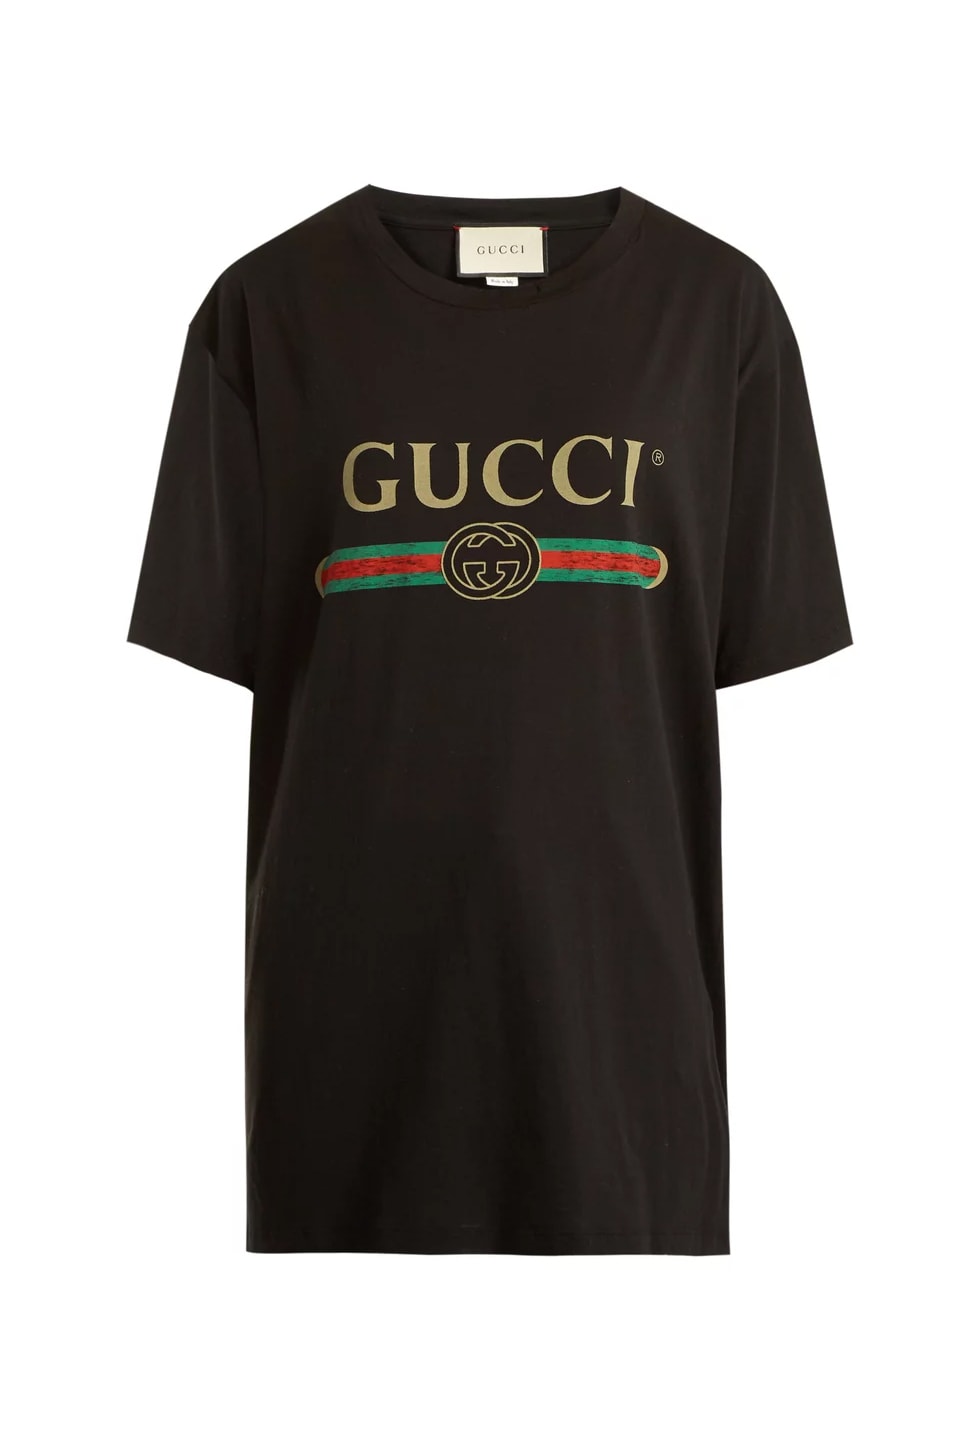 Gucci Restocks Black Vintage Logo Tee | Hypebae